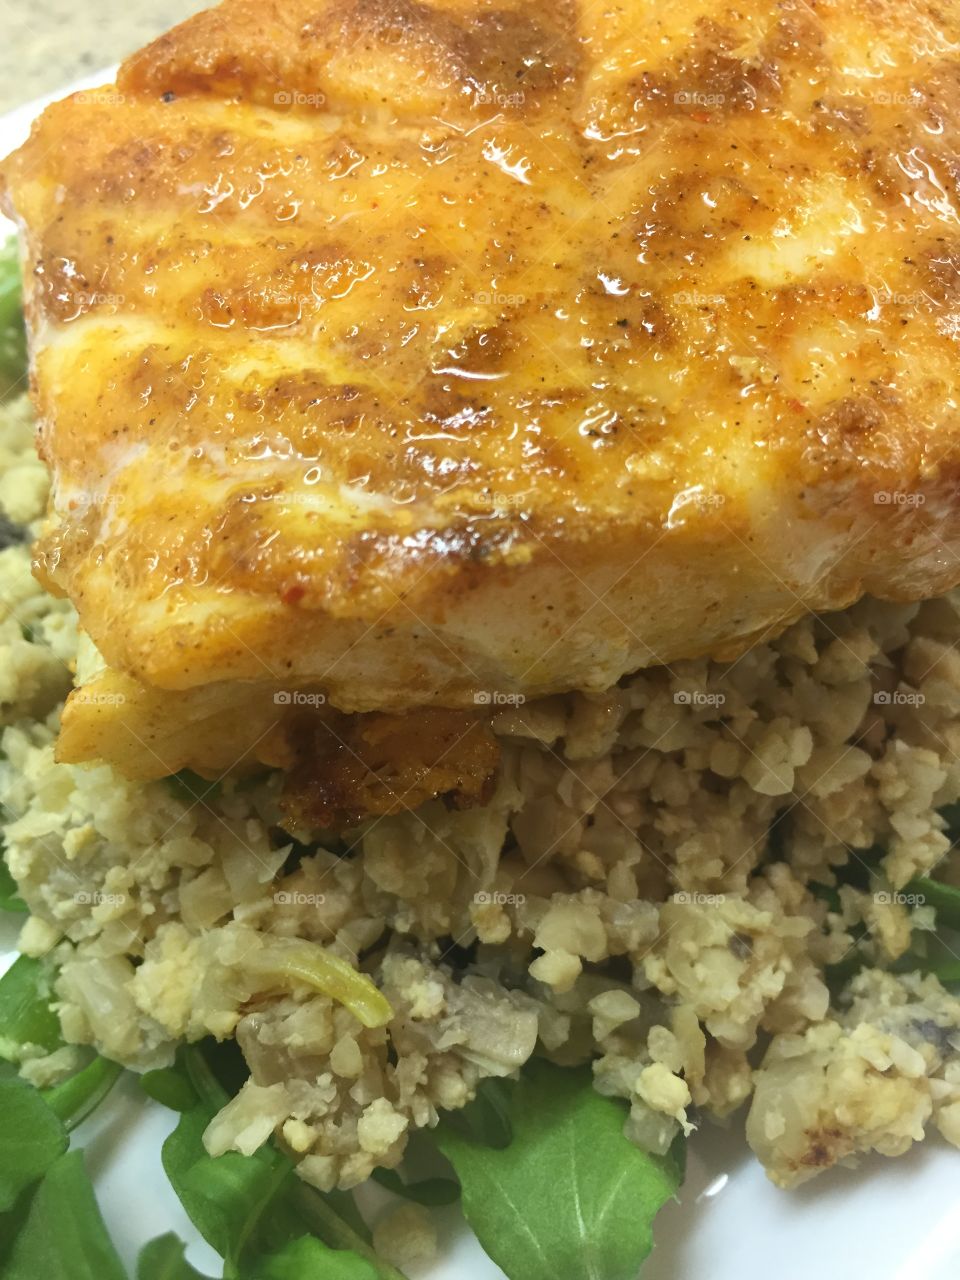 My Creation - Tandoori Cod on Cauliflower Rice